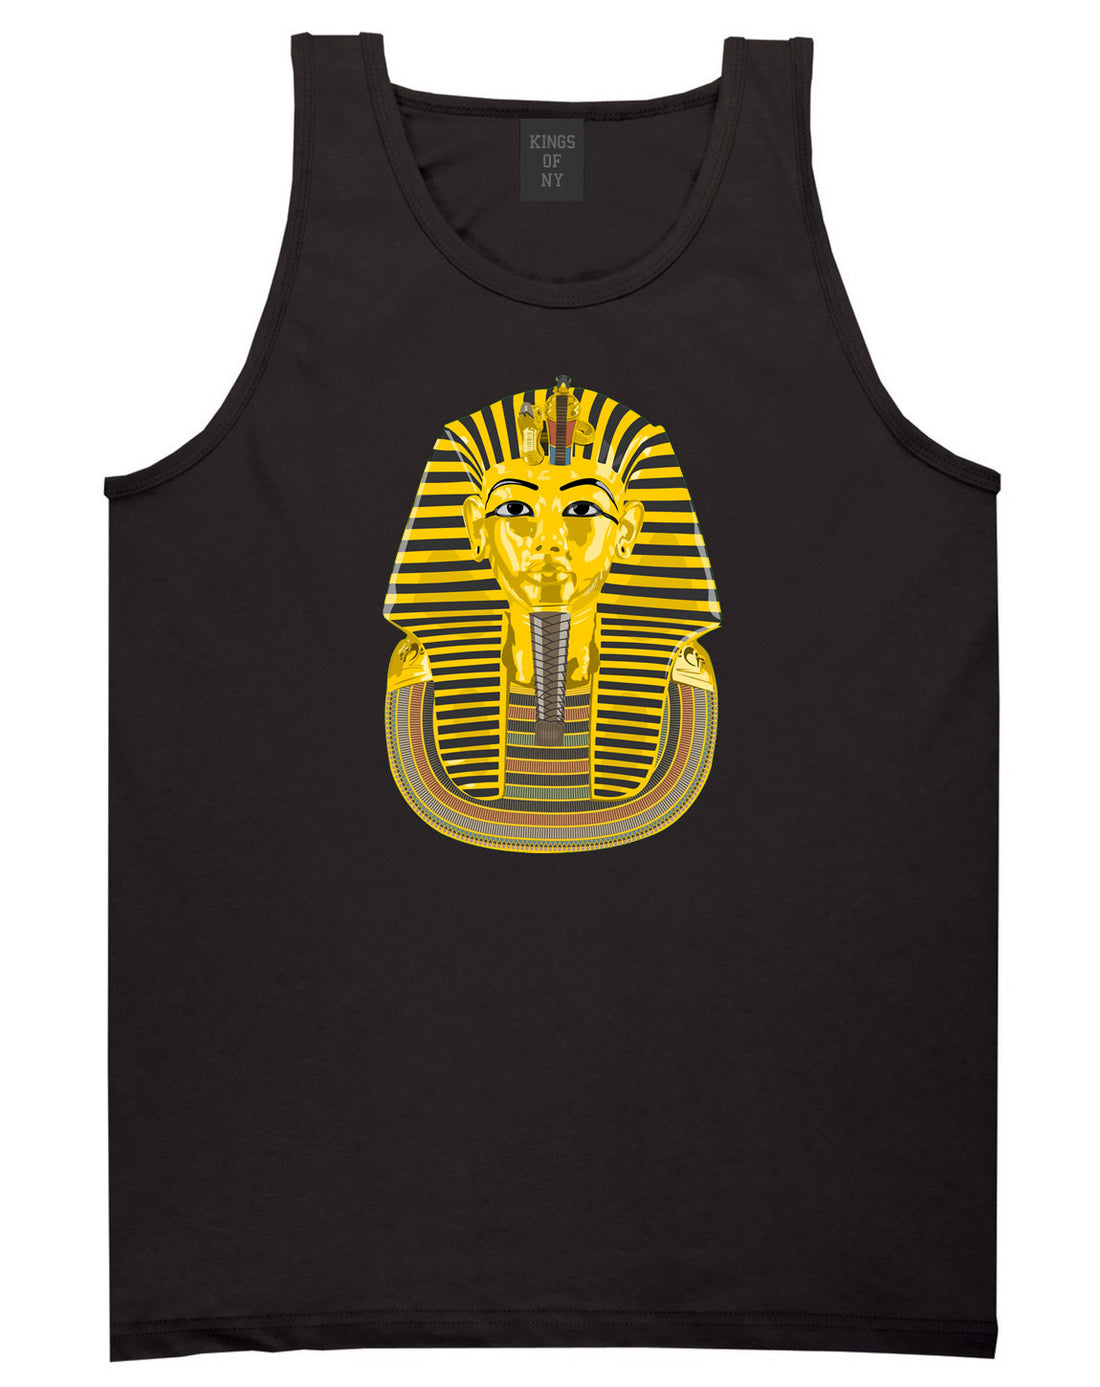 Pharaoh Egypt Gold Egyptian Head  Tank Top In Black by Kings Of NY